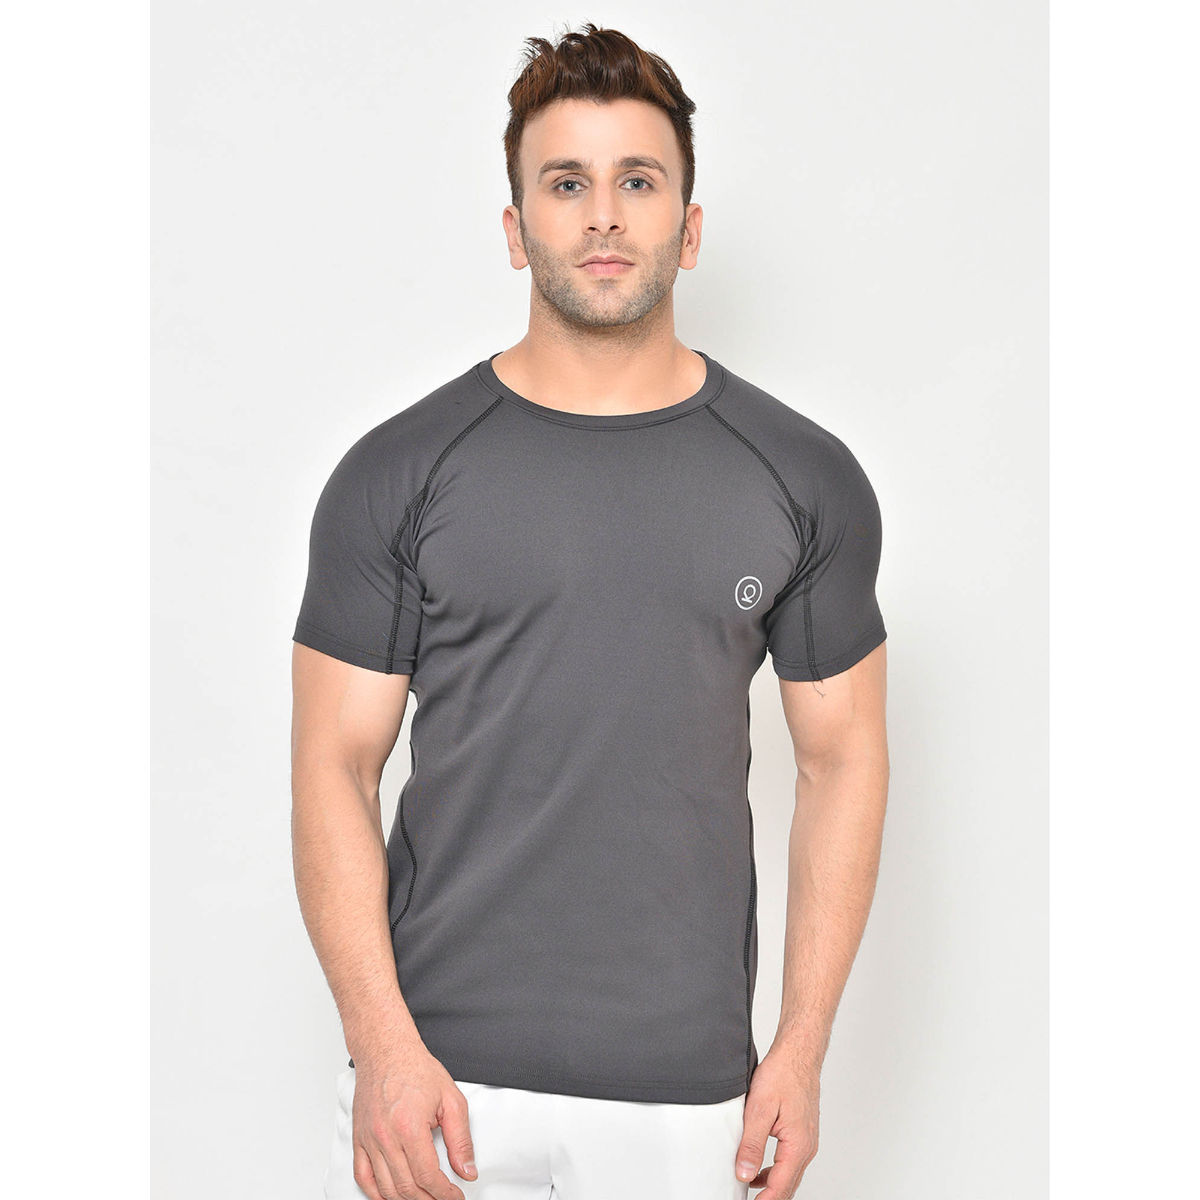 CHKOKKO Men'S Compression Round Neck Regular Dry Fit Gym Sports T-Shirt Dark Grey (XL)